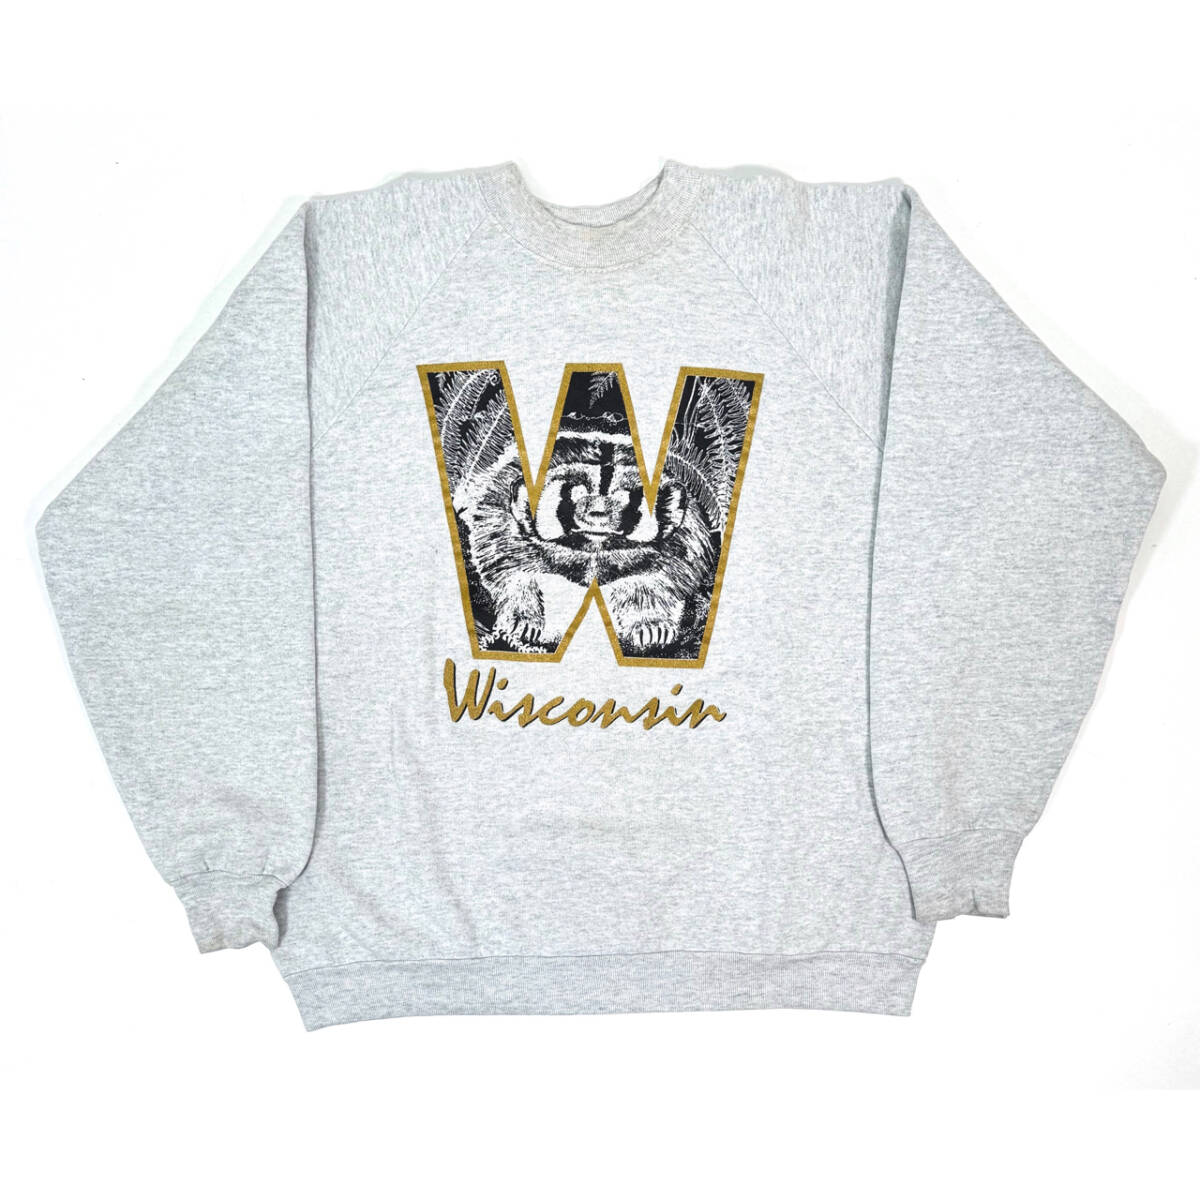 USA製 1990s FRUIT OF THE LOOM Wisconsin Sweat shirts XL Gray オールド フルーツオブザルーム スウェットシャツ 霜降り グレー_画像1